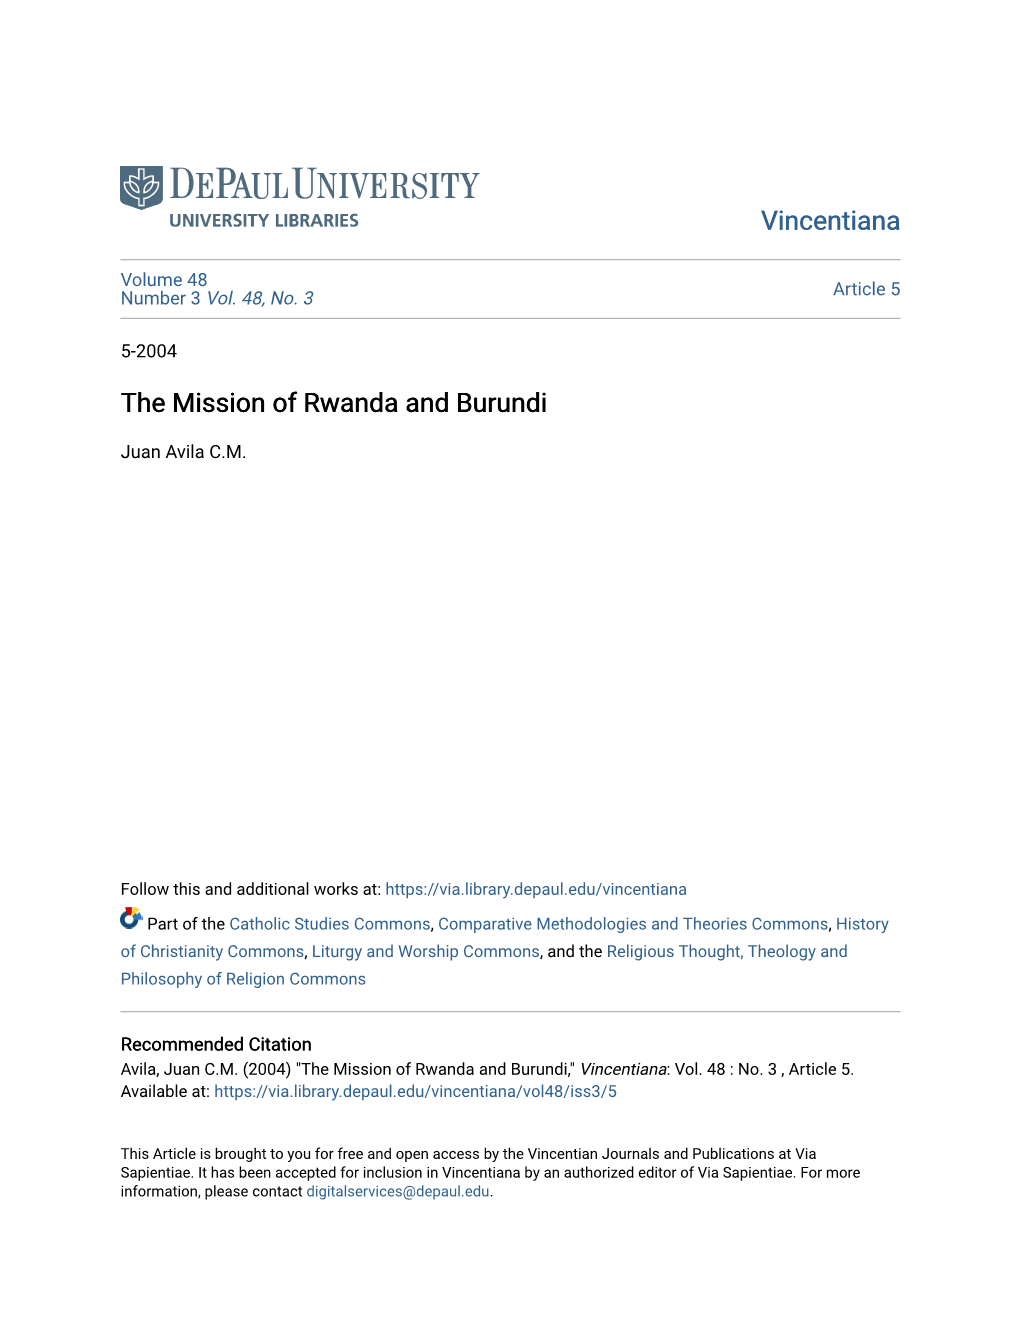 The Mission of Rwanda and Burundi